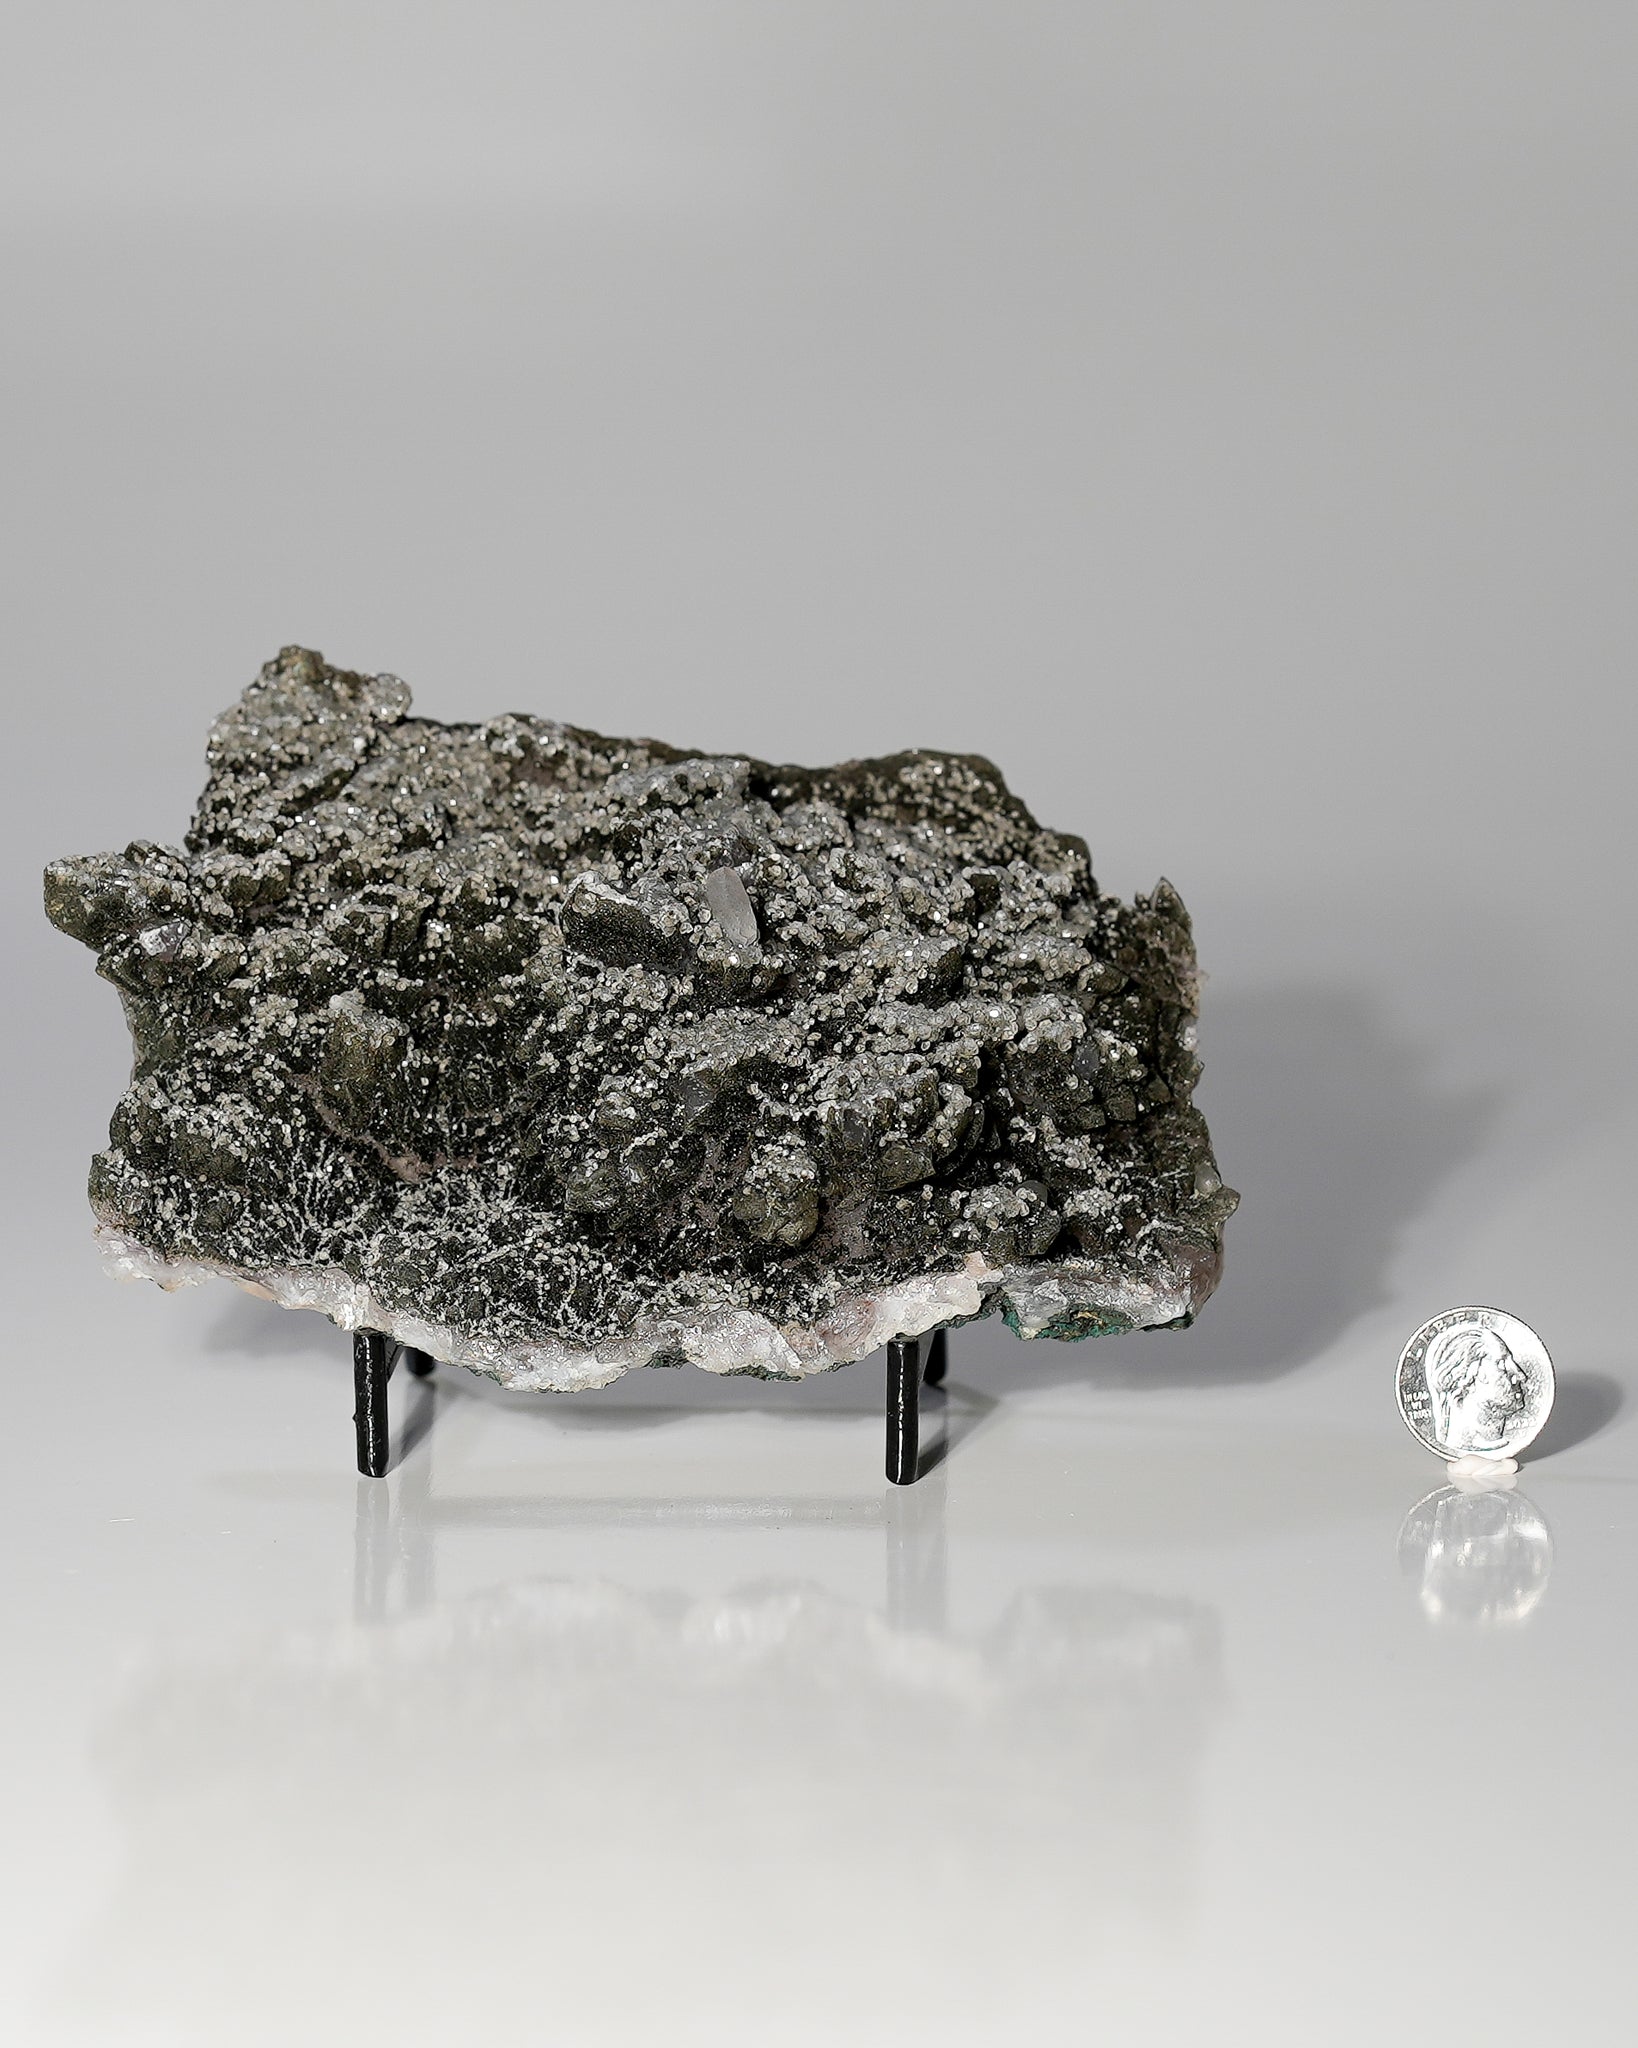 Manganoan Adamite and Calcite on Psilomelane